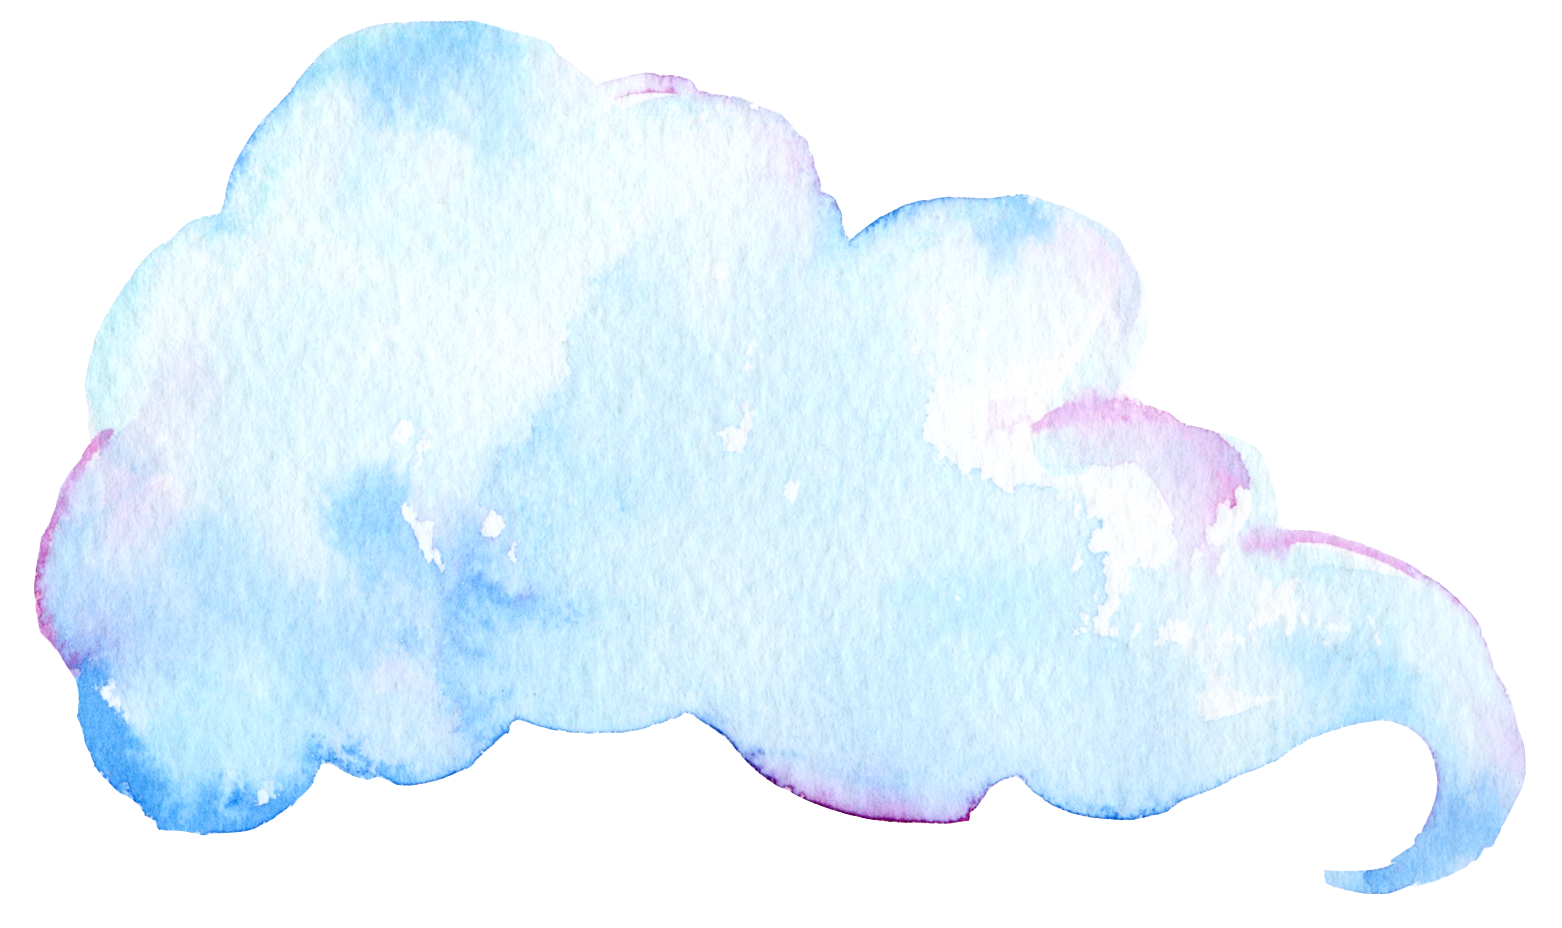 cloud clipart watercolor